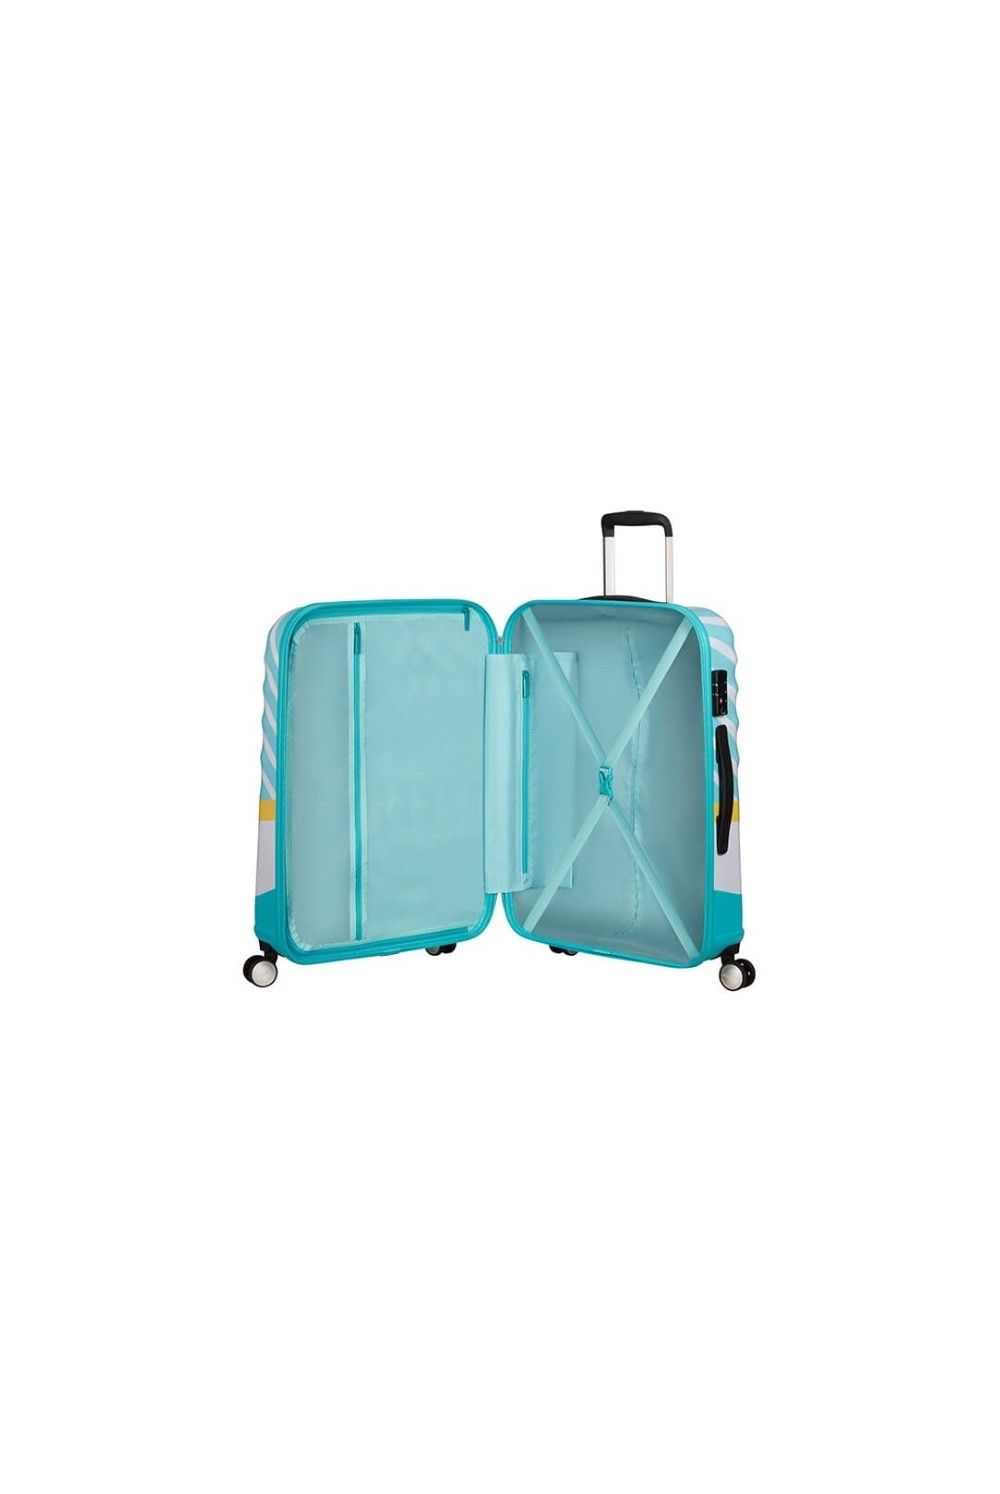 Child Suitcase AT Mickey Blue Kiss 67cm 64Liter 4 Wheel